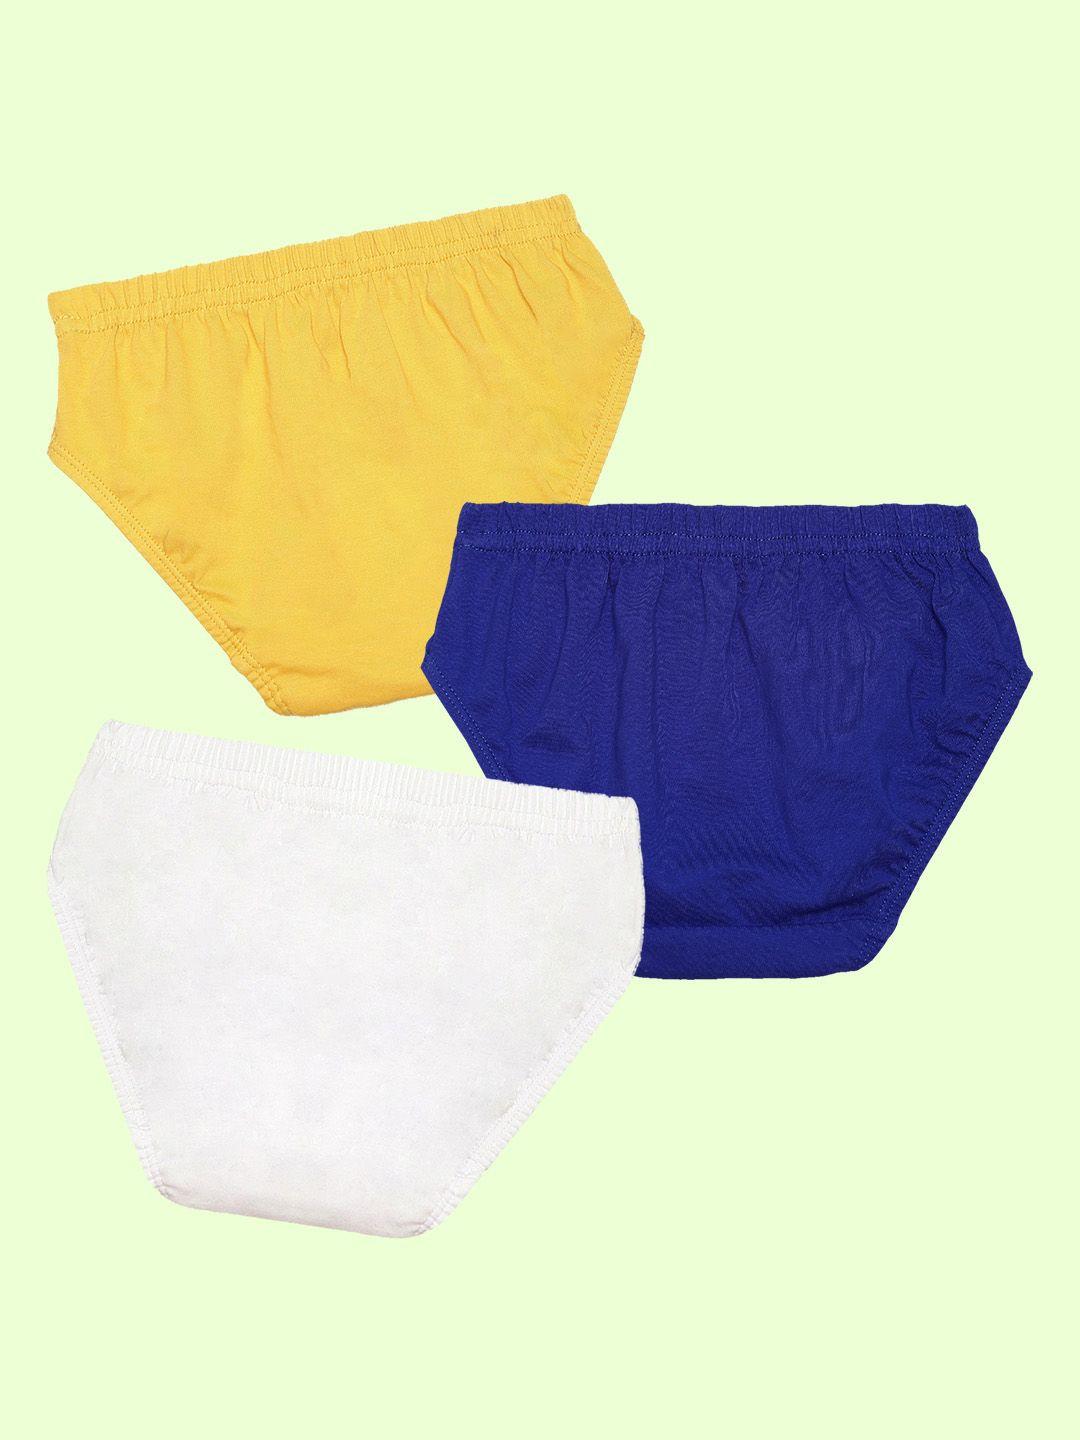 nusyl-boys-pack-of-3-pure-cotton-basic-briefs-nubcbrfpo3.0065